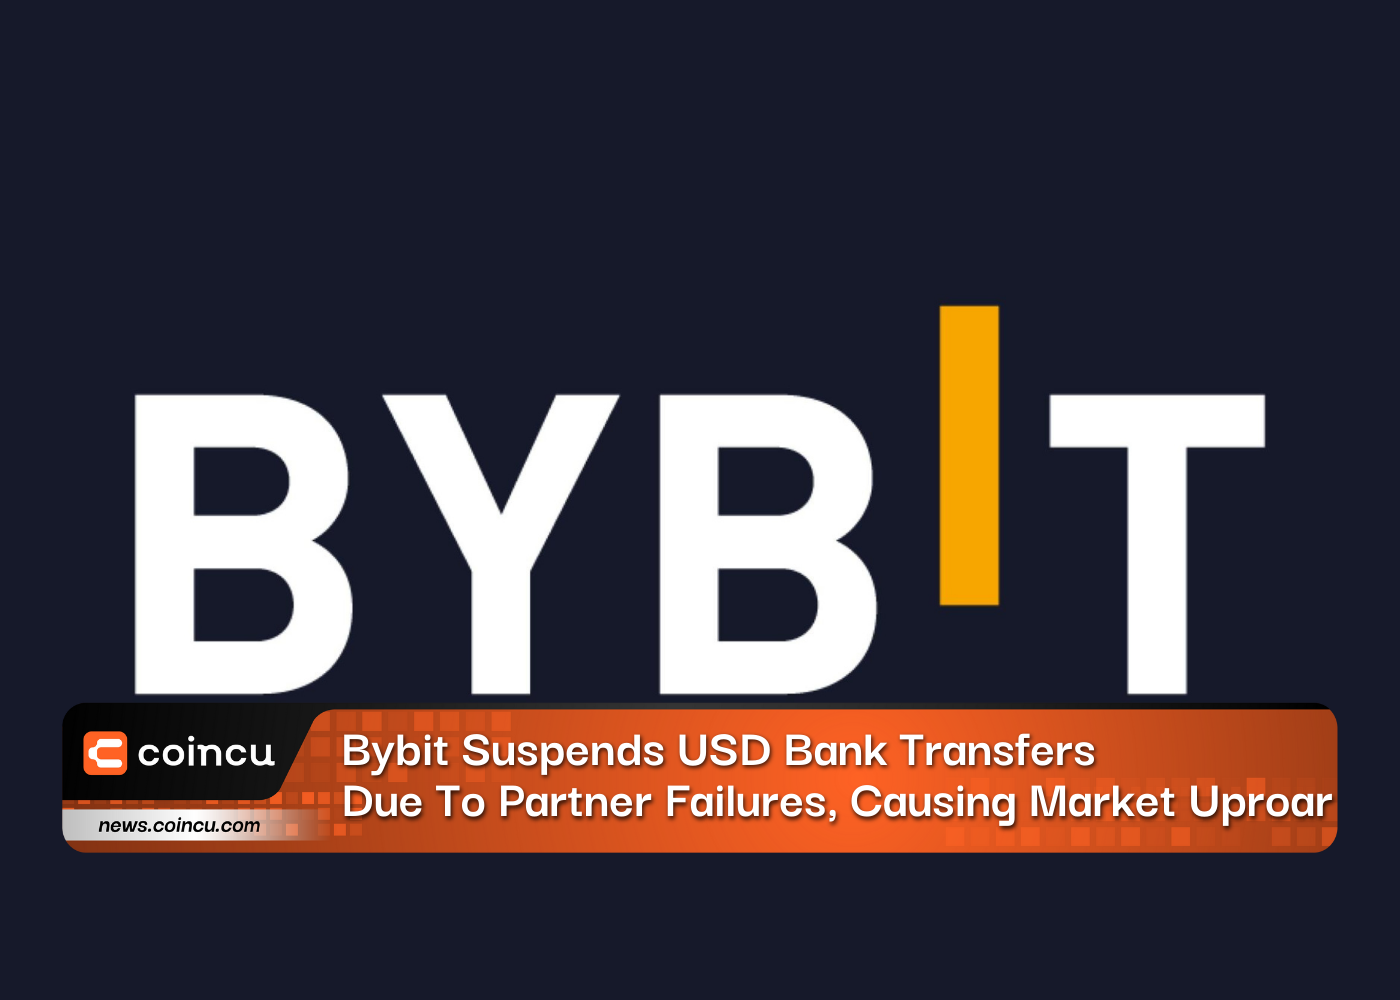 Bybit Suspends USD Bank Transfers